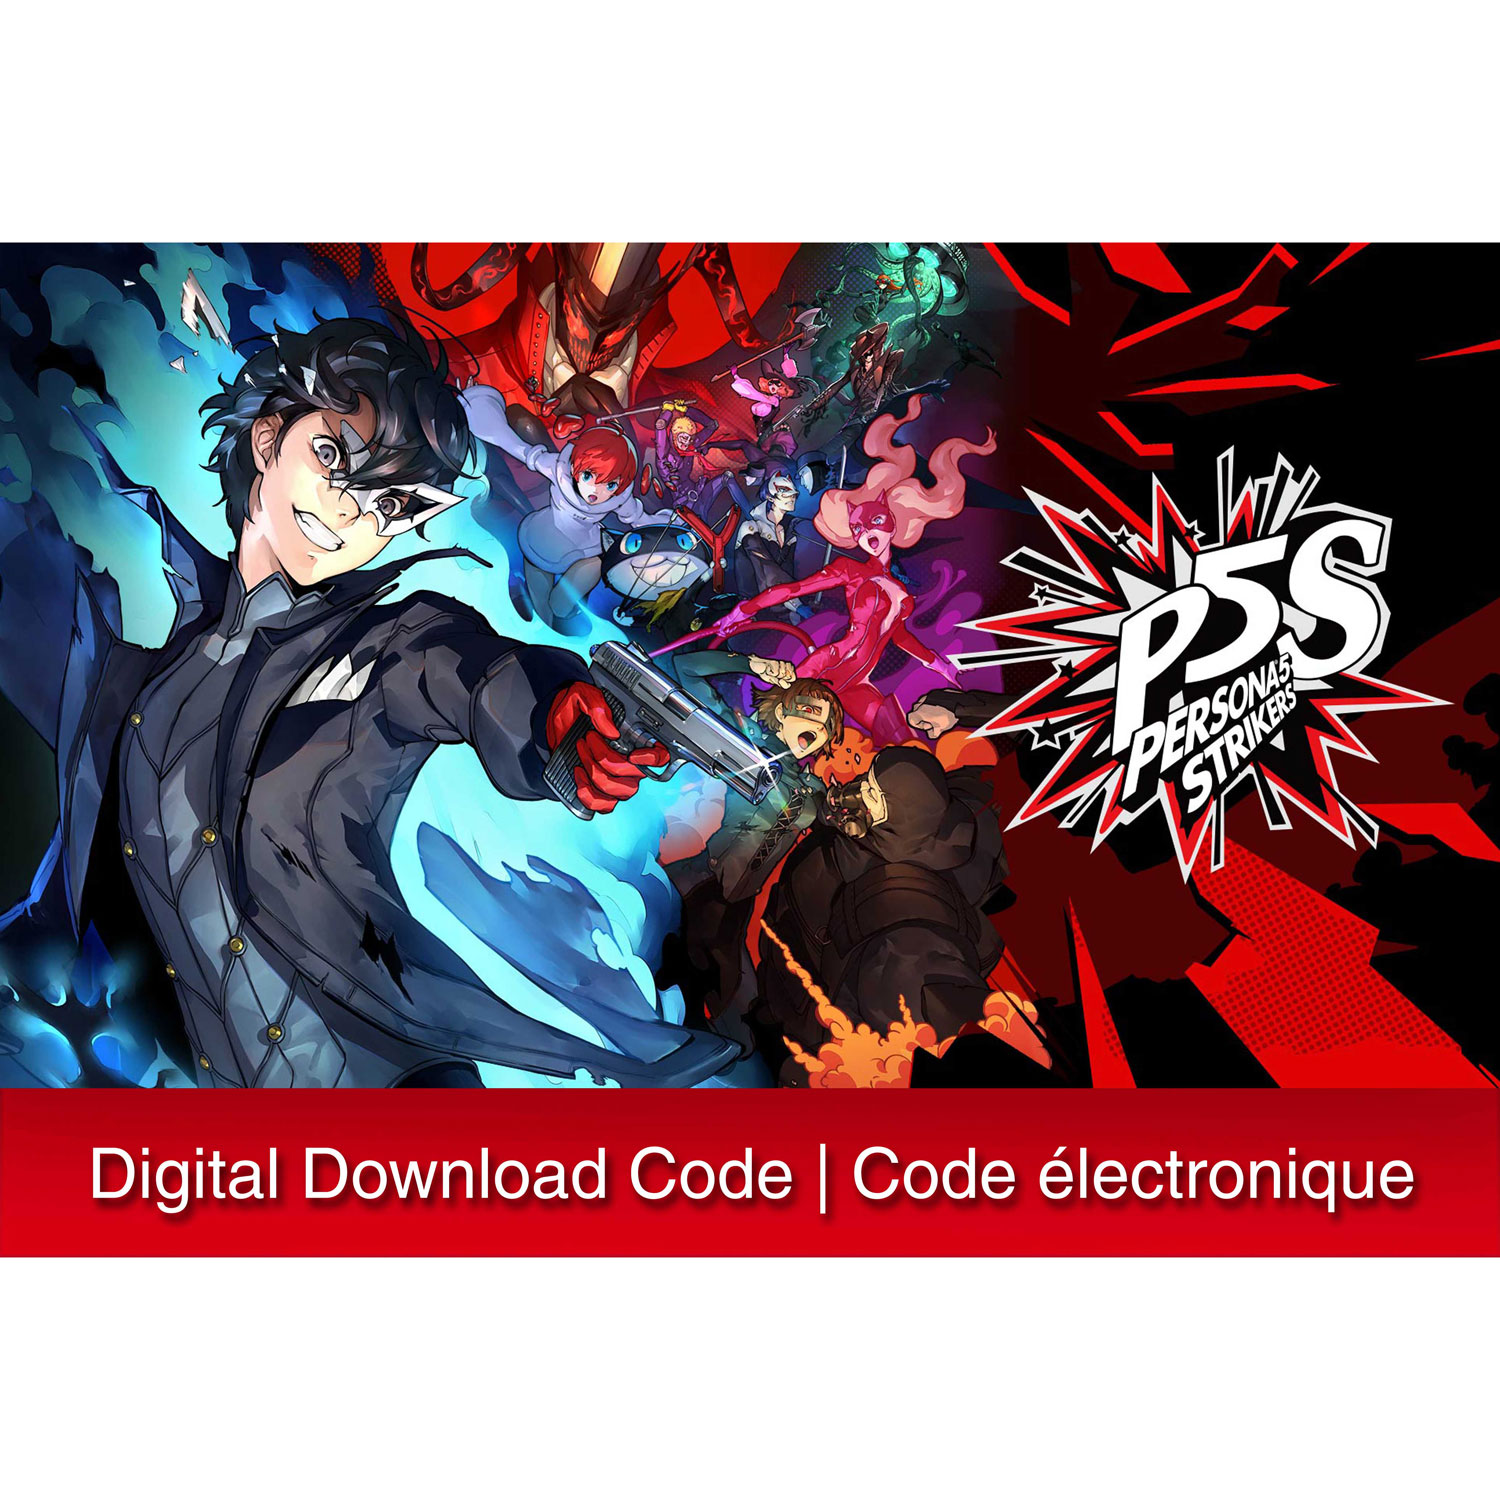 Persona 5 Strikers (Switch) - Digital Download